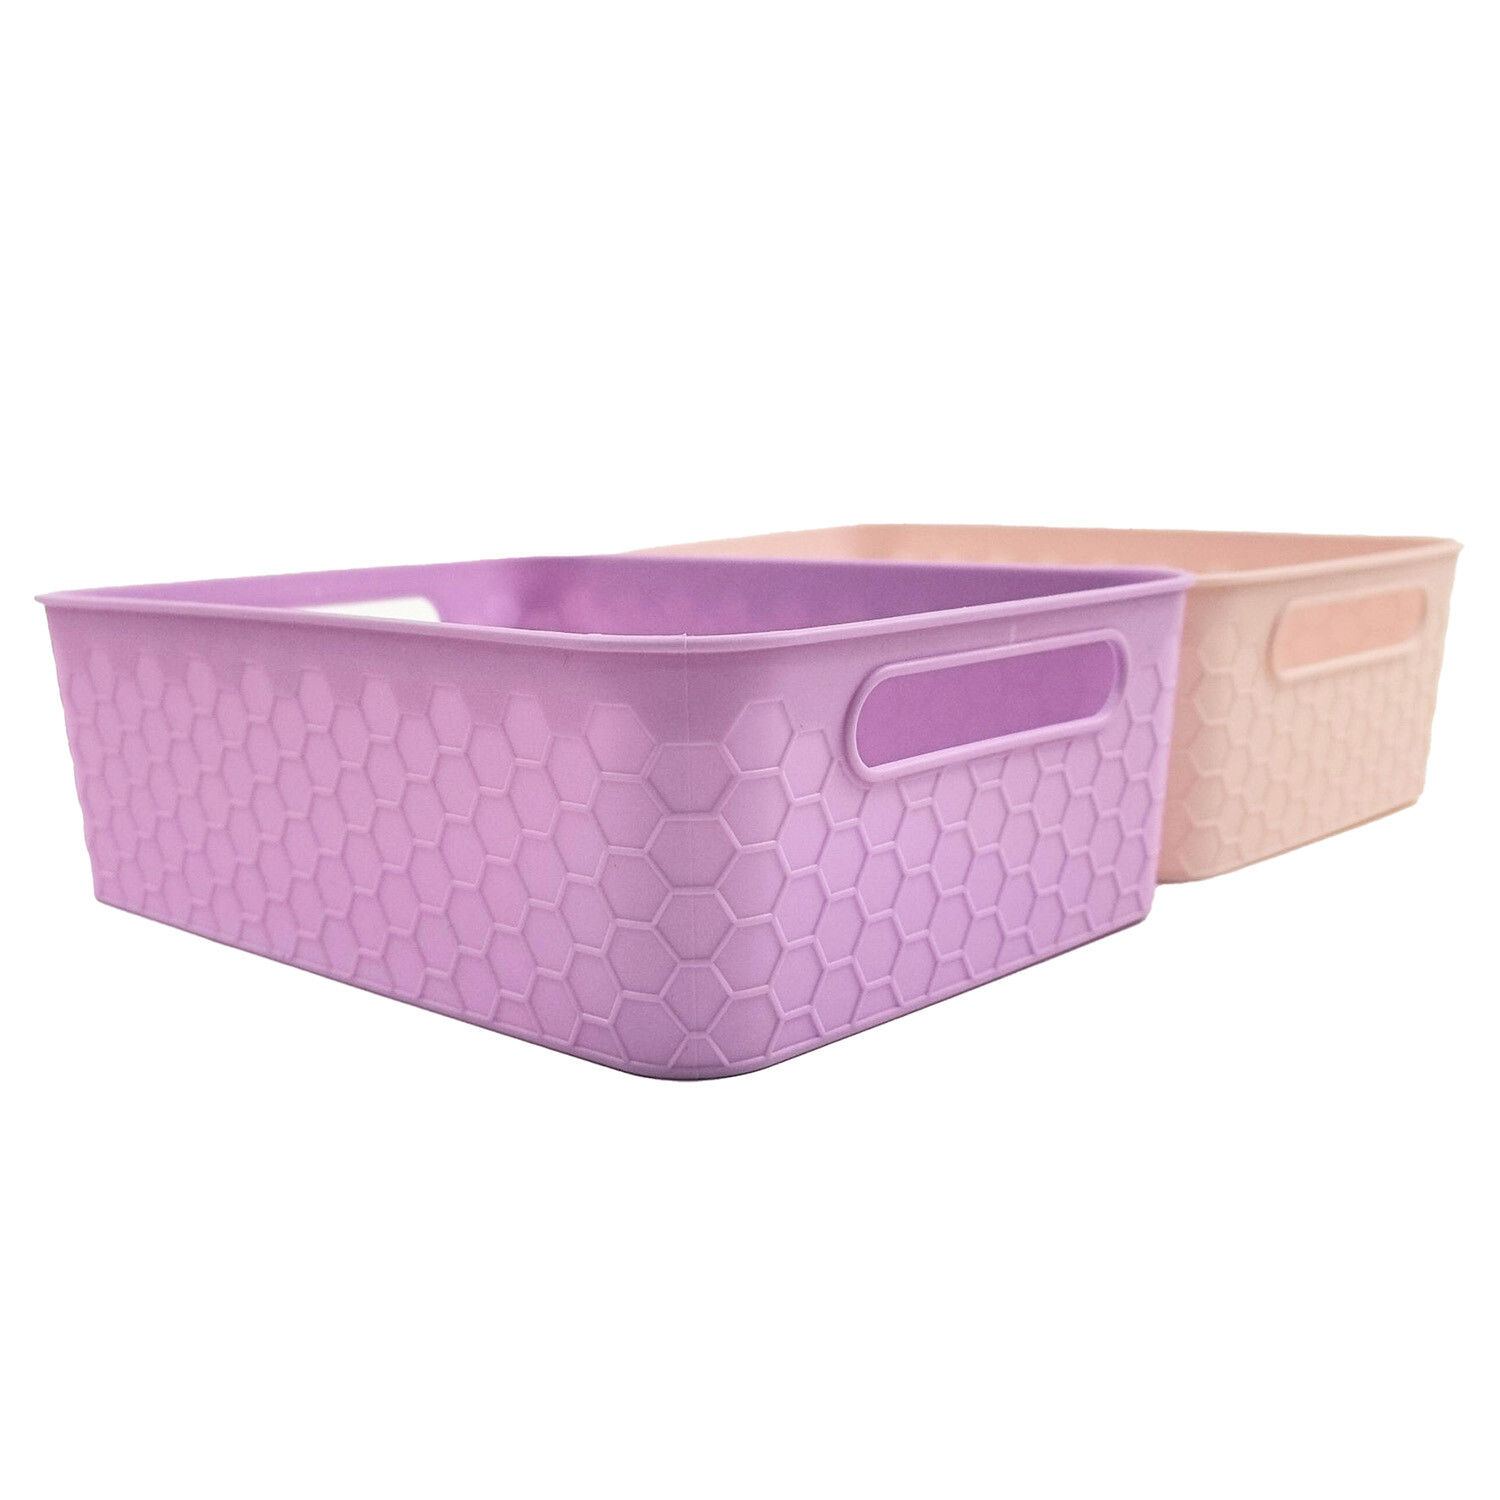 Single Honeycomb Medium Storage Basket in Assorted styles Image 1